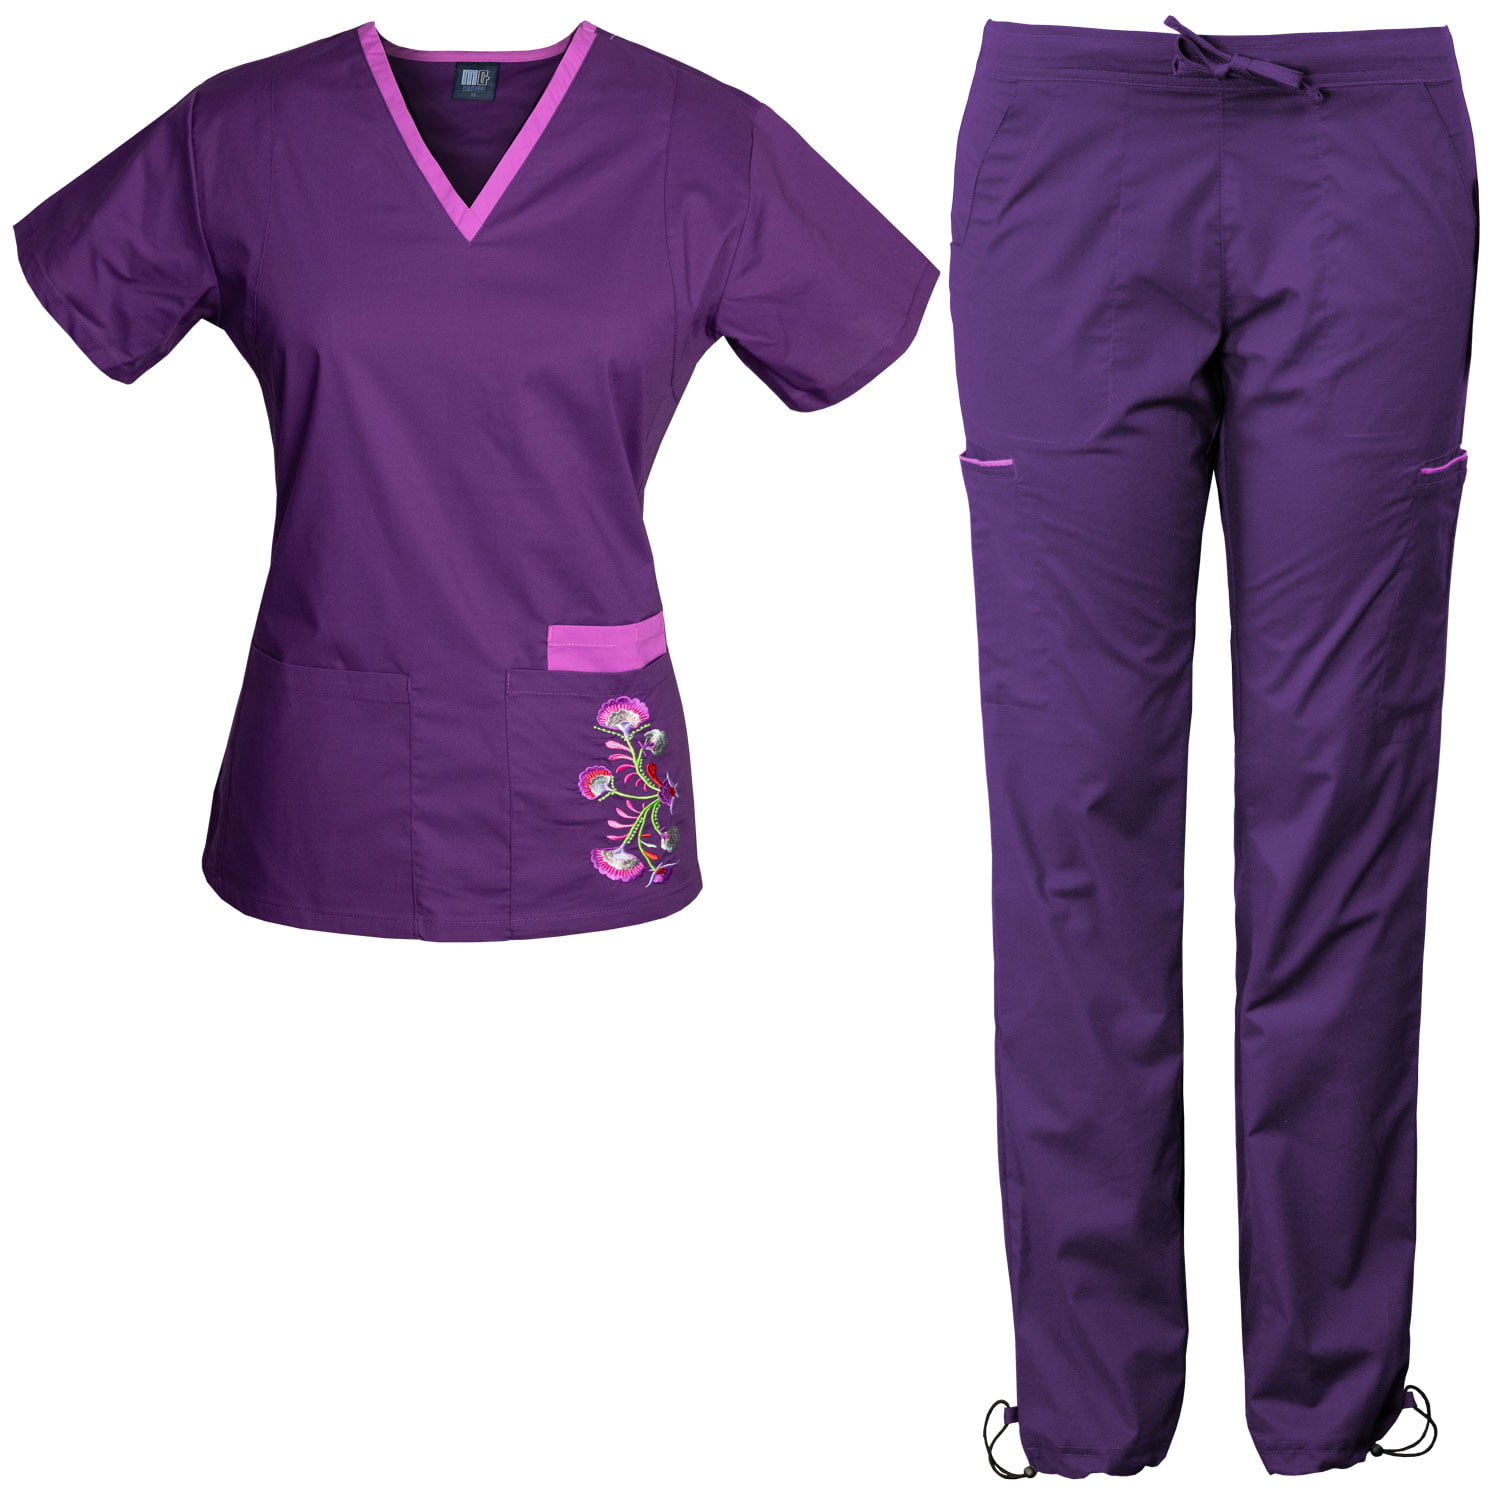 Medgear Women S Stretch Scrubs With Embroidery Scrubs Set Medical Uniform